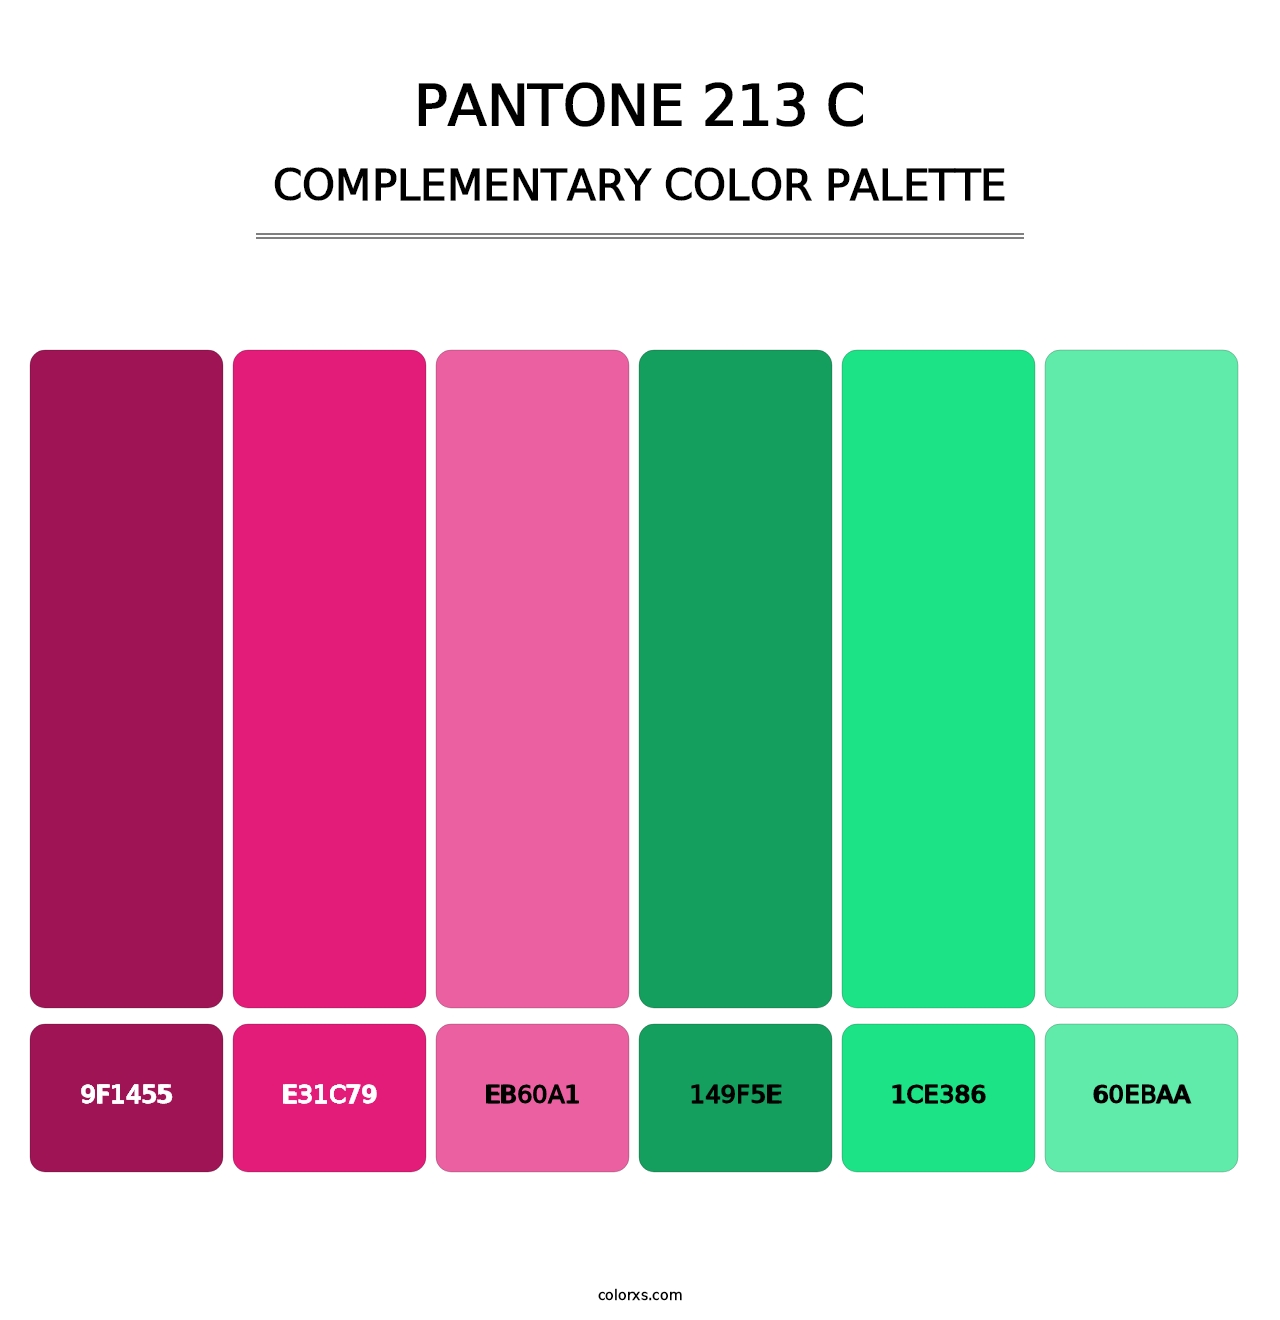 PANTONE 213 C - Complementary Color Palette